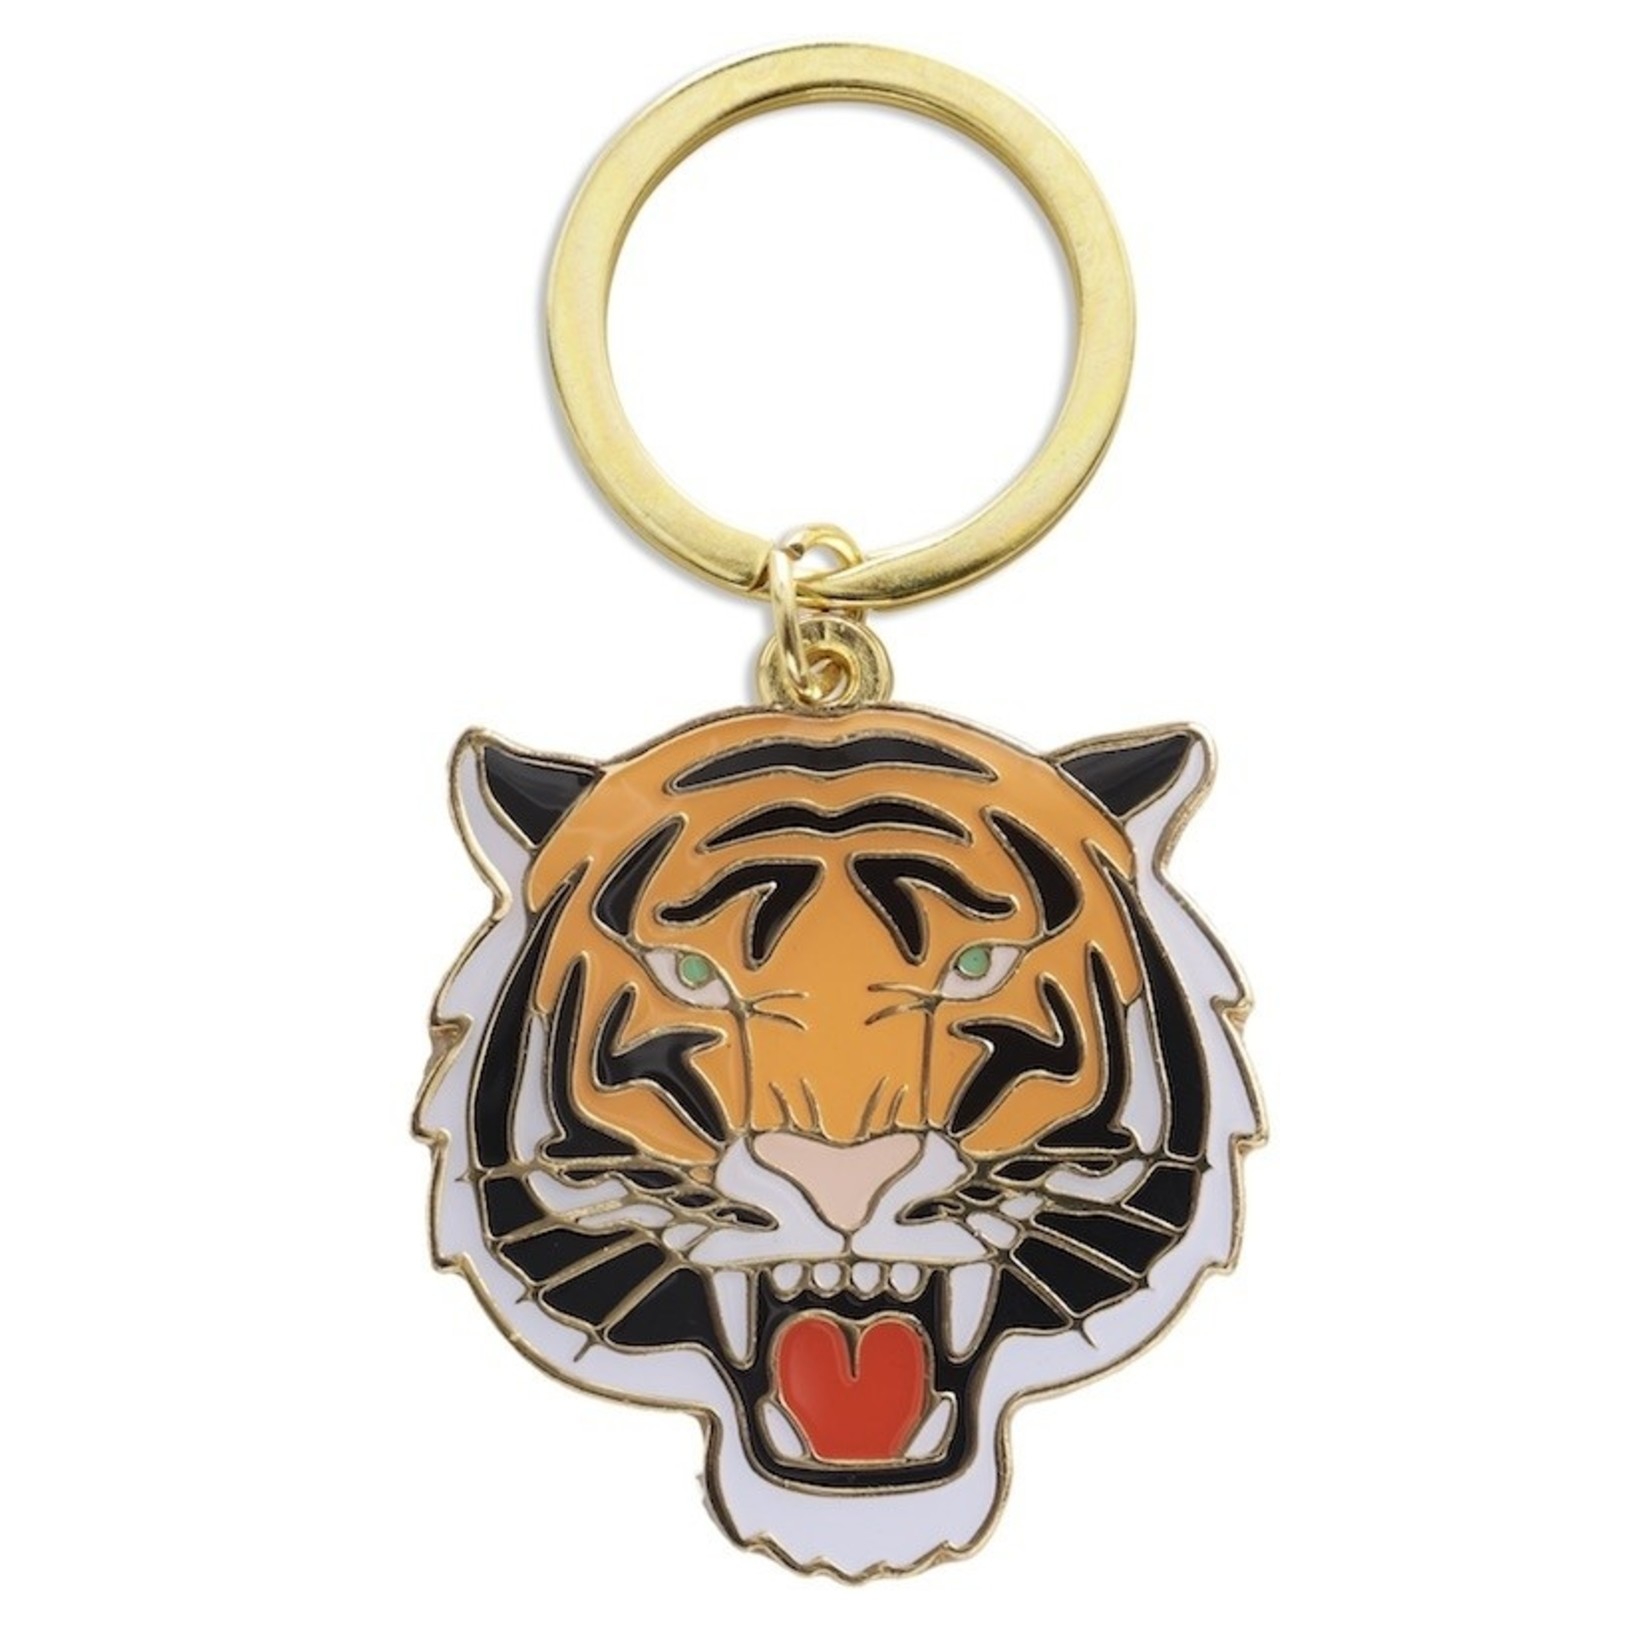 The Found Tiger Enamel Keychain